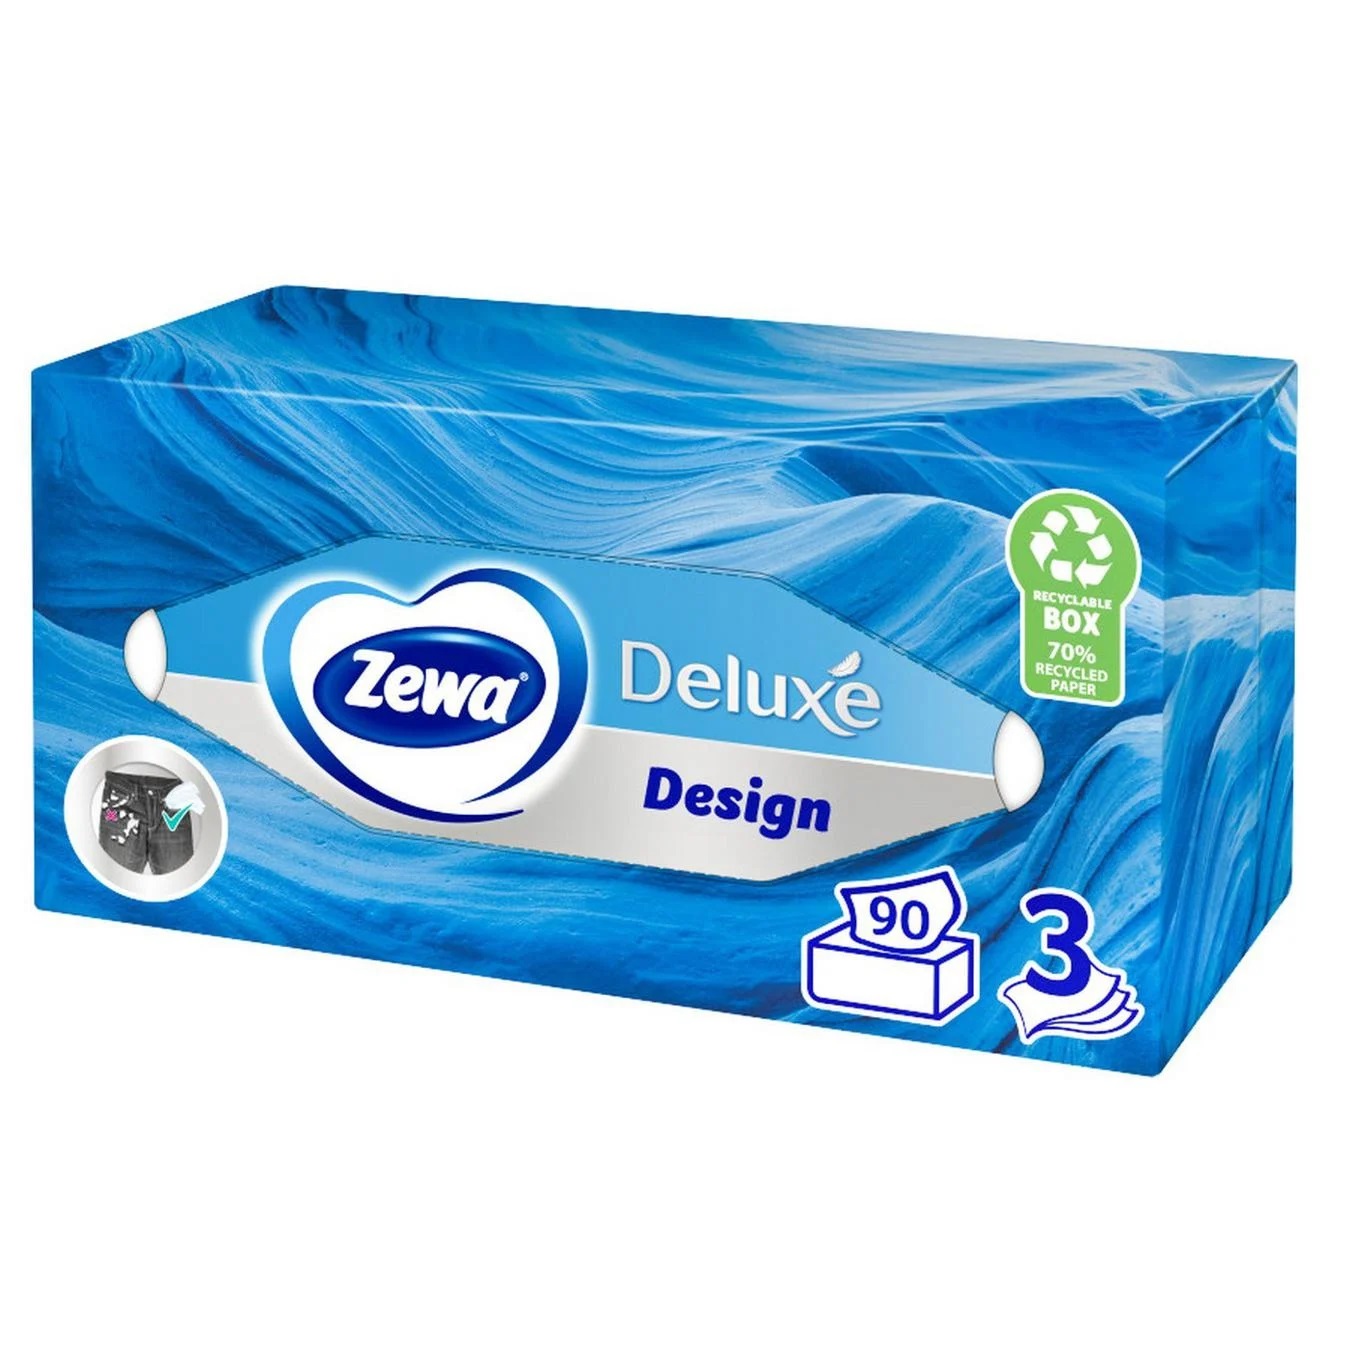 Zewa Deluxe Three-Ply Paper Tissues 90pcs 3